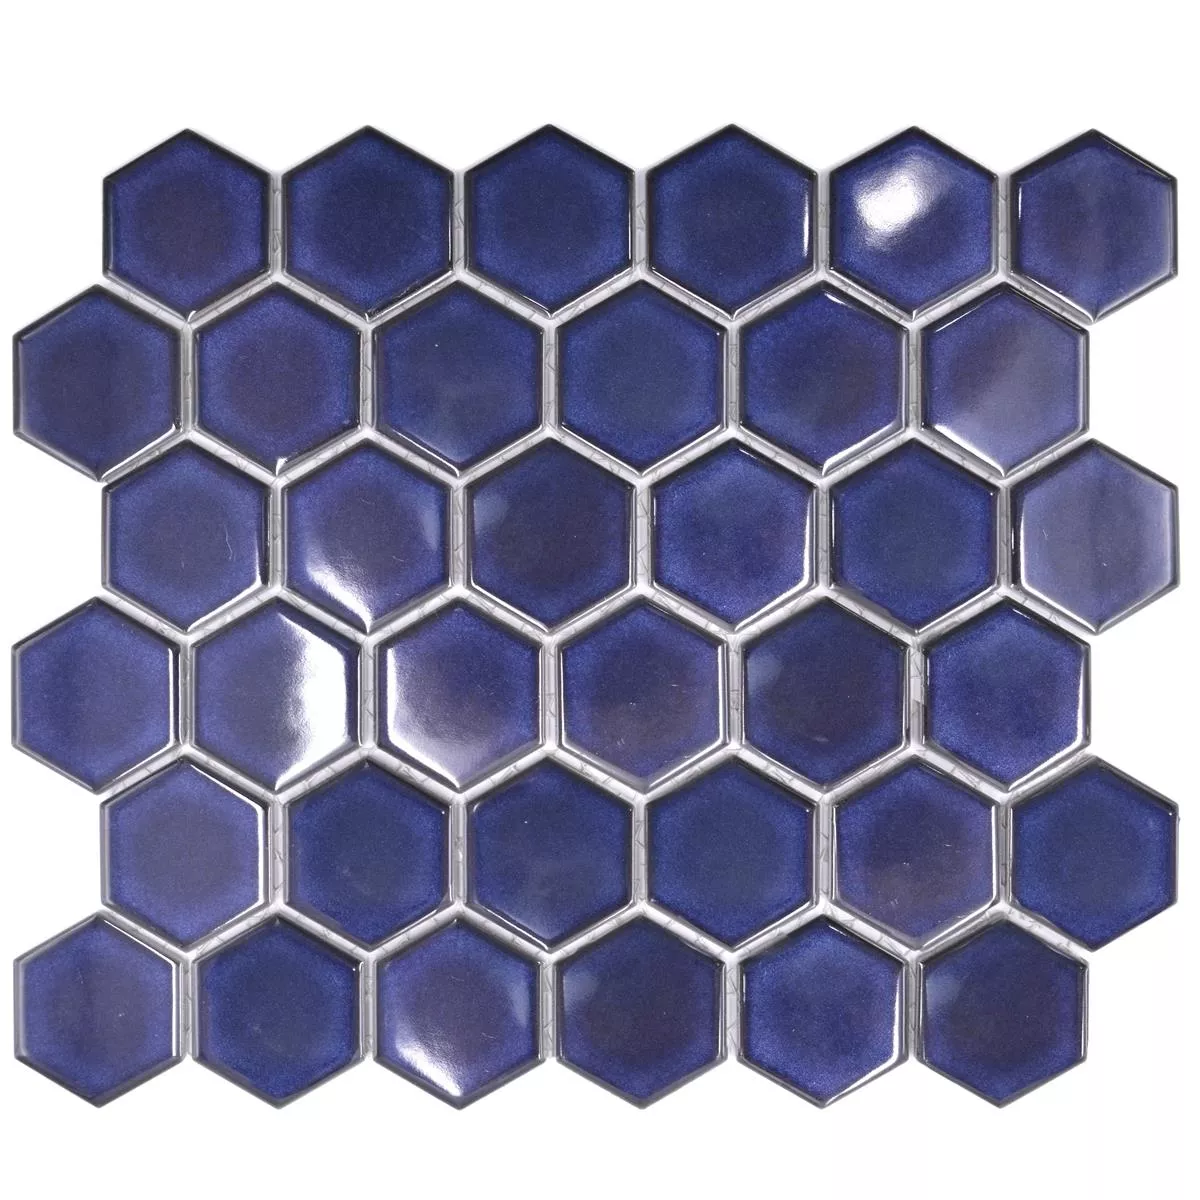 Campione da Ceramica Mosaico Salomon Esagono Cobalto Blu H51